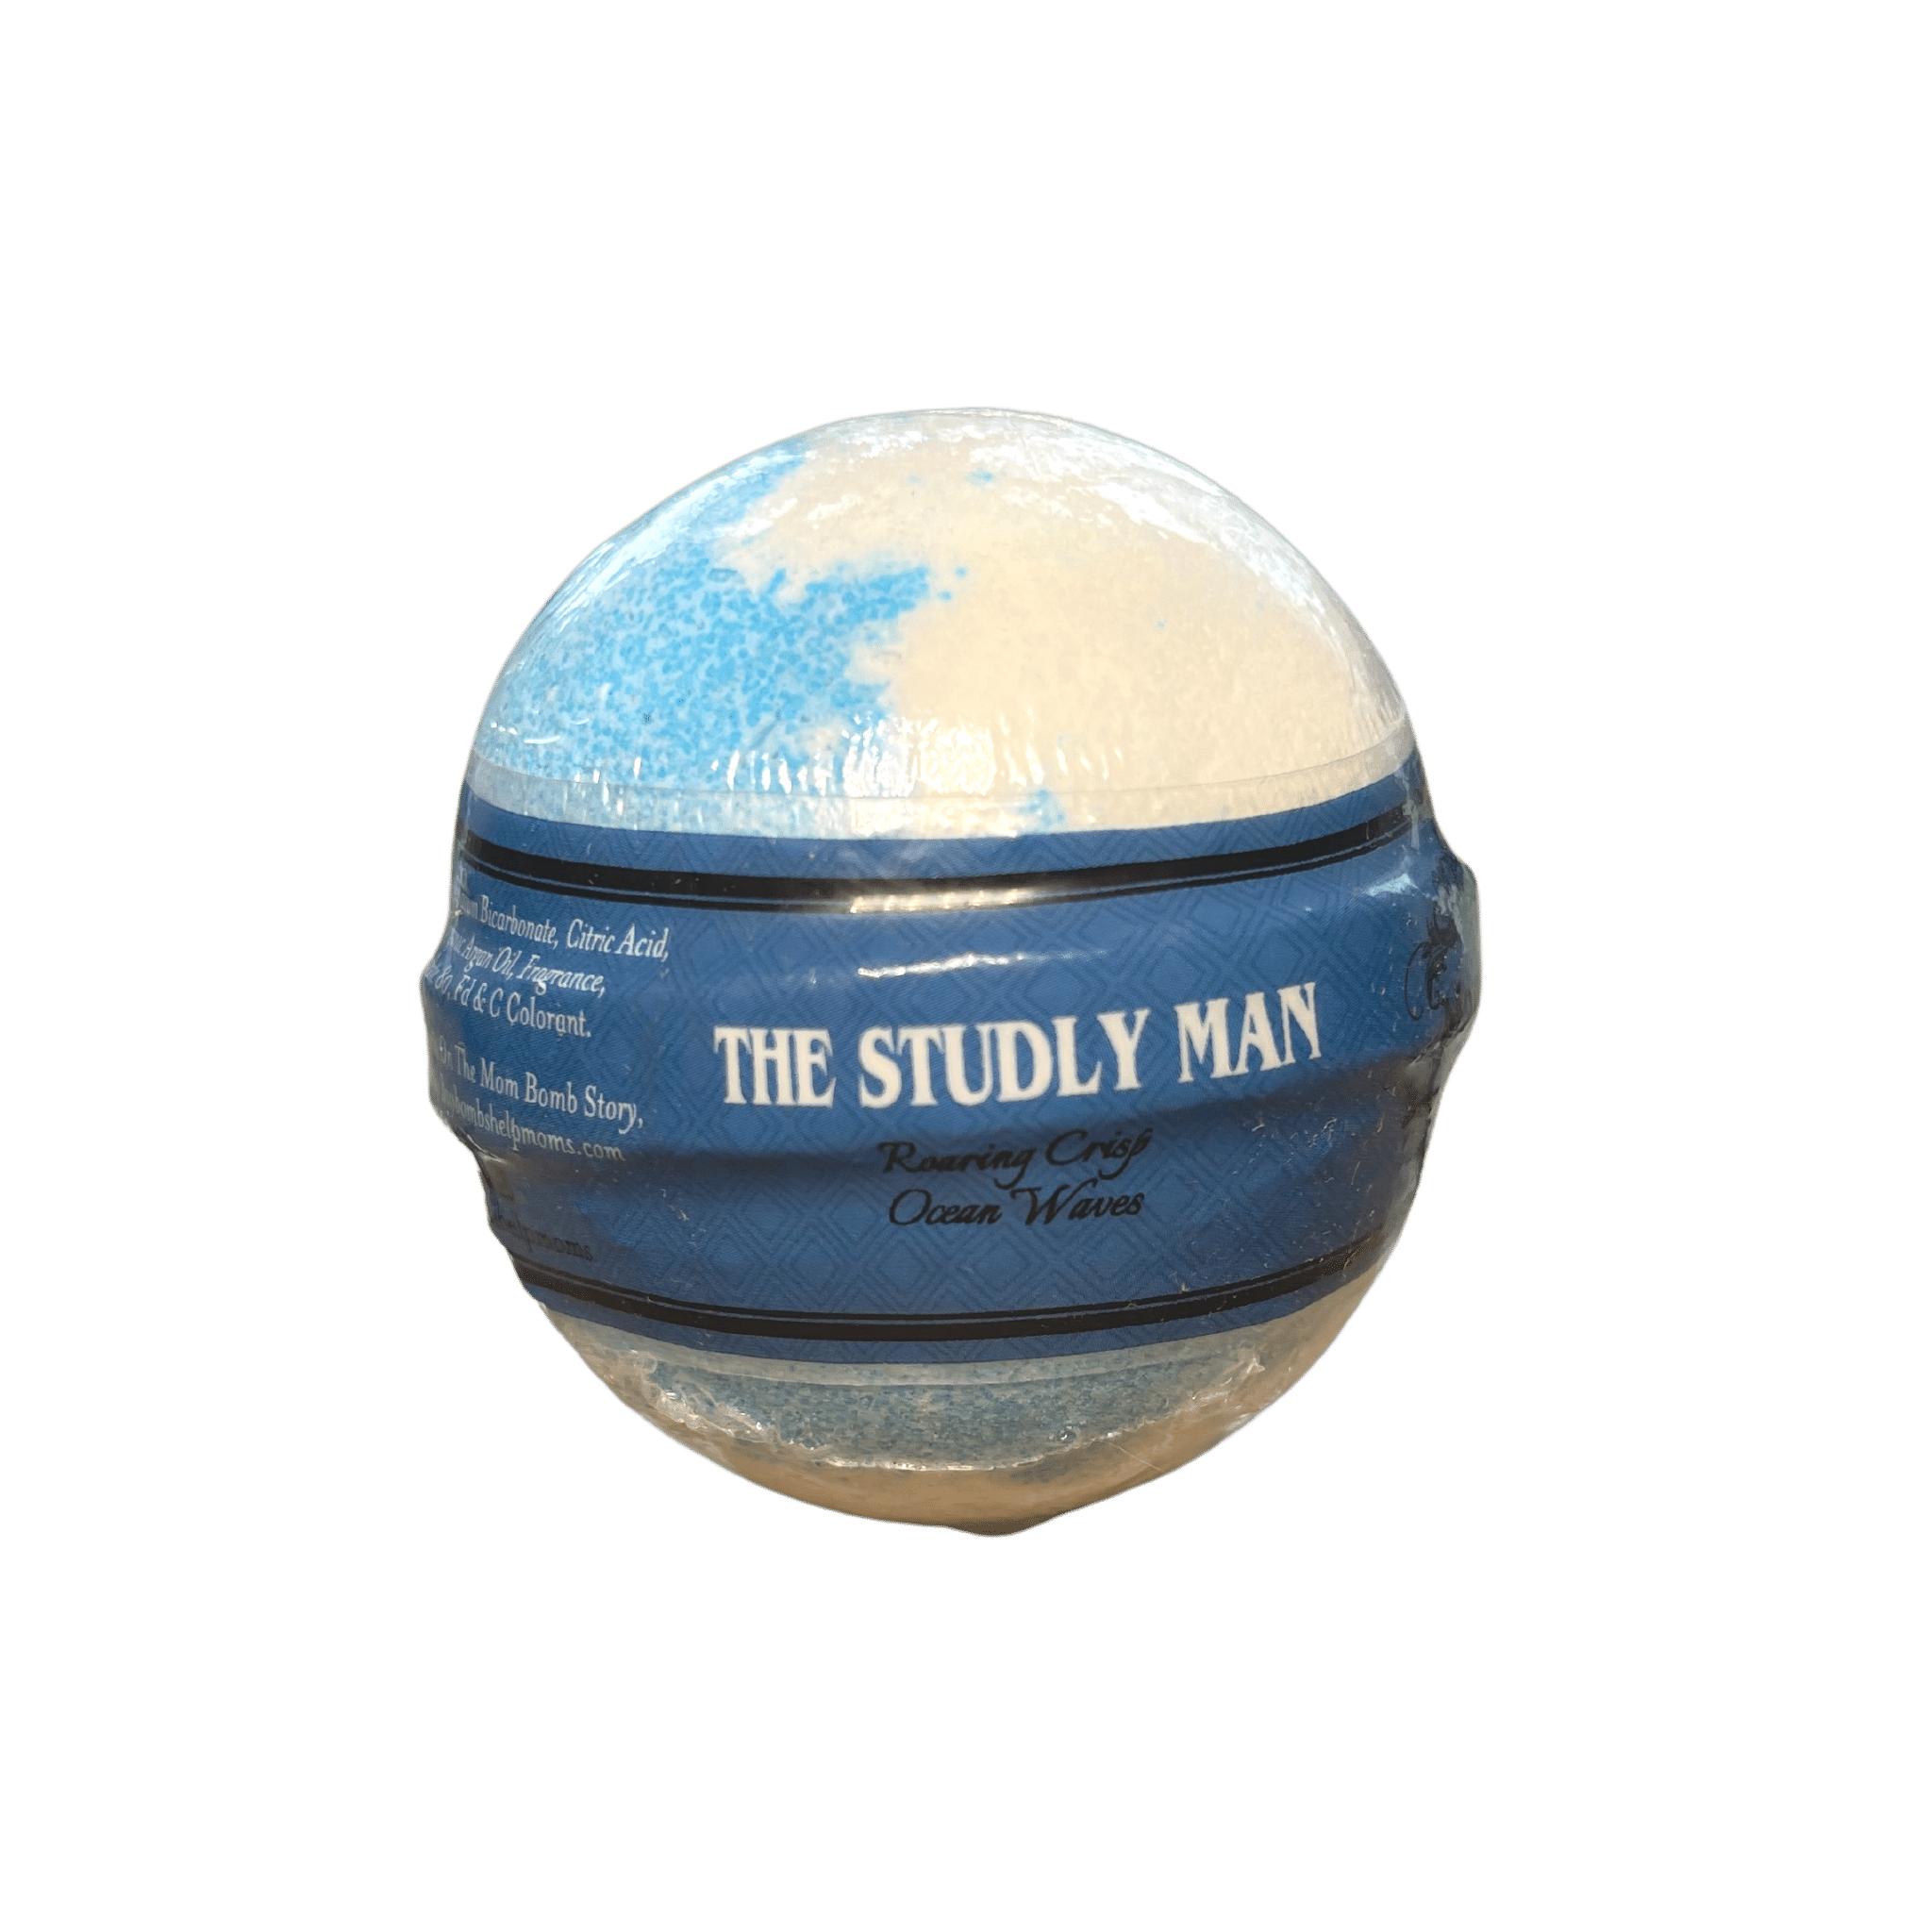 The Studly Man Bath Bomb - Mom Bomb